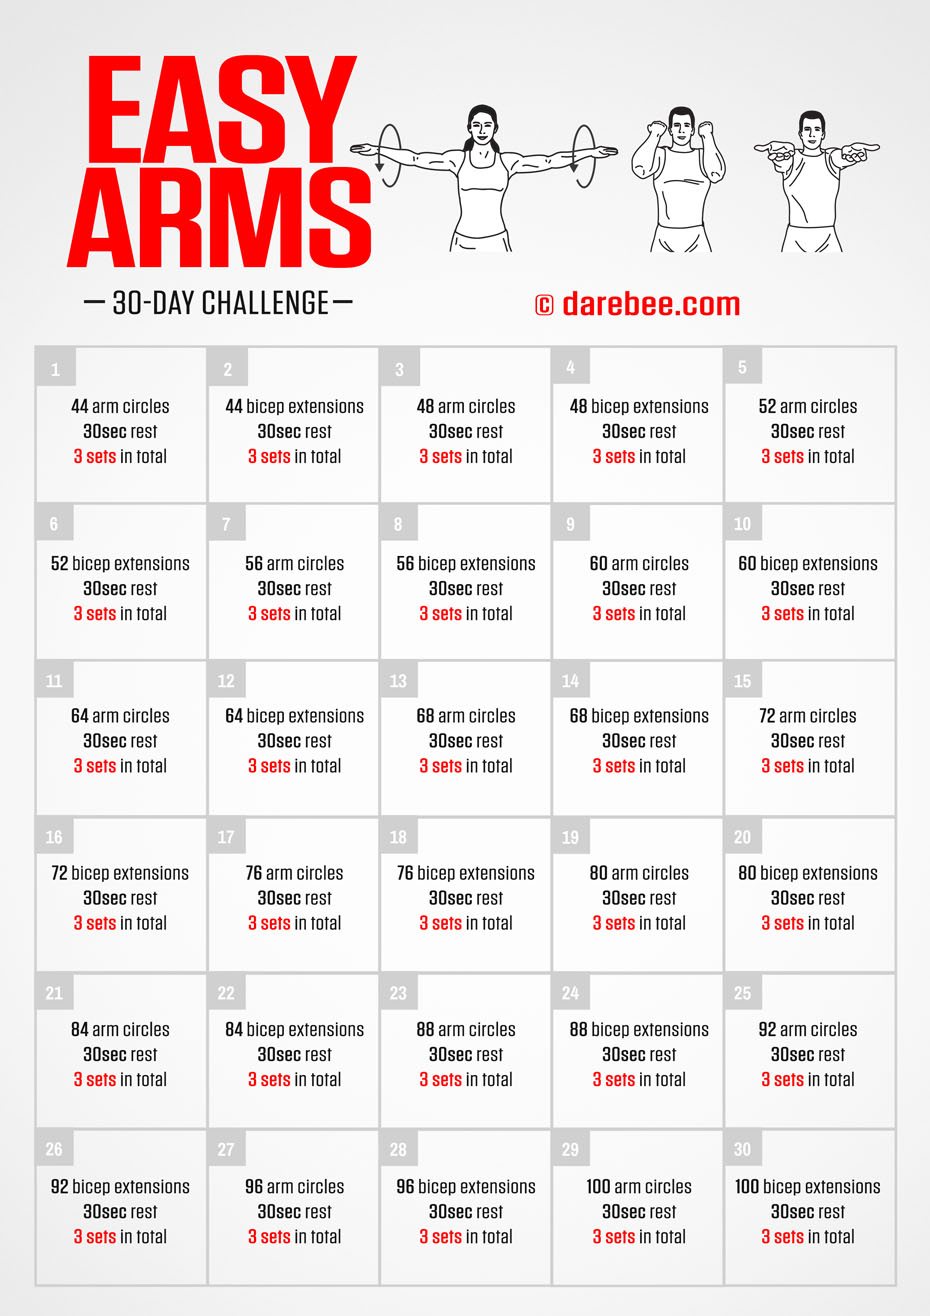 https://darebee.com/images/challenges/easy-arms-challenge.jpg